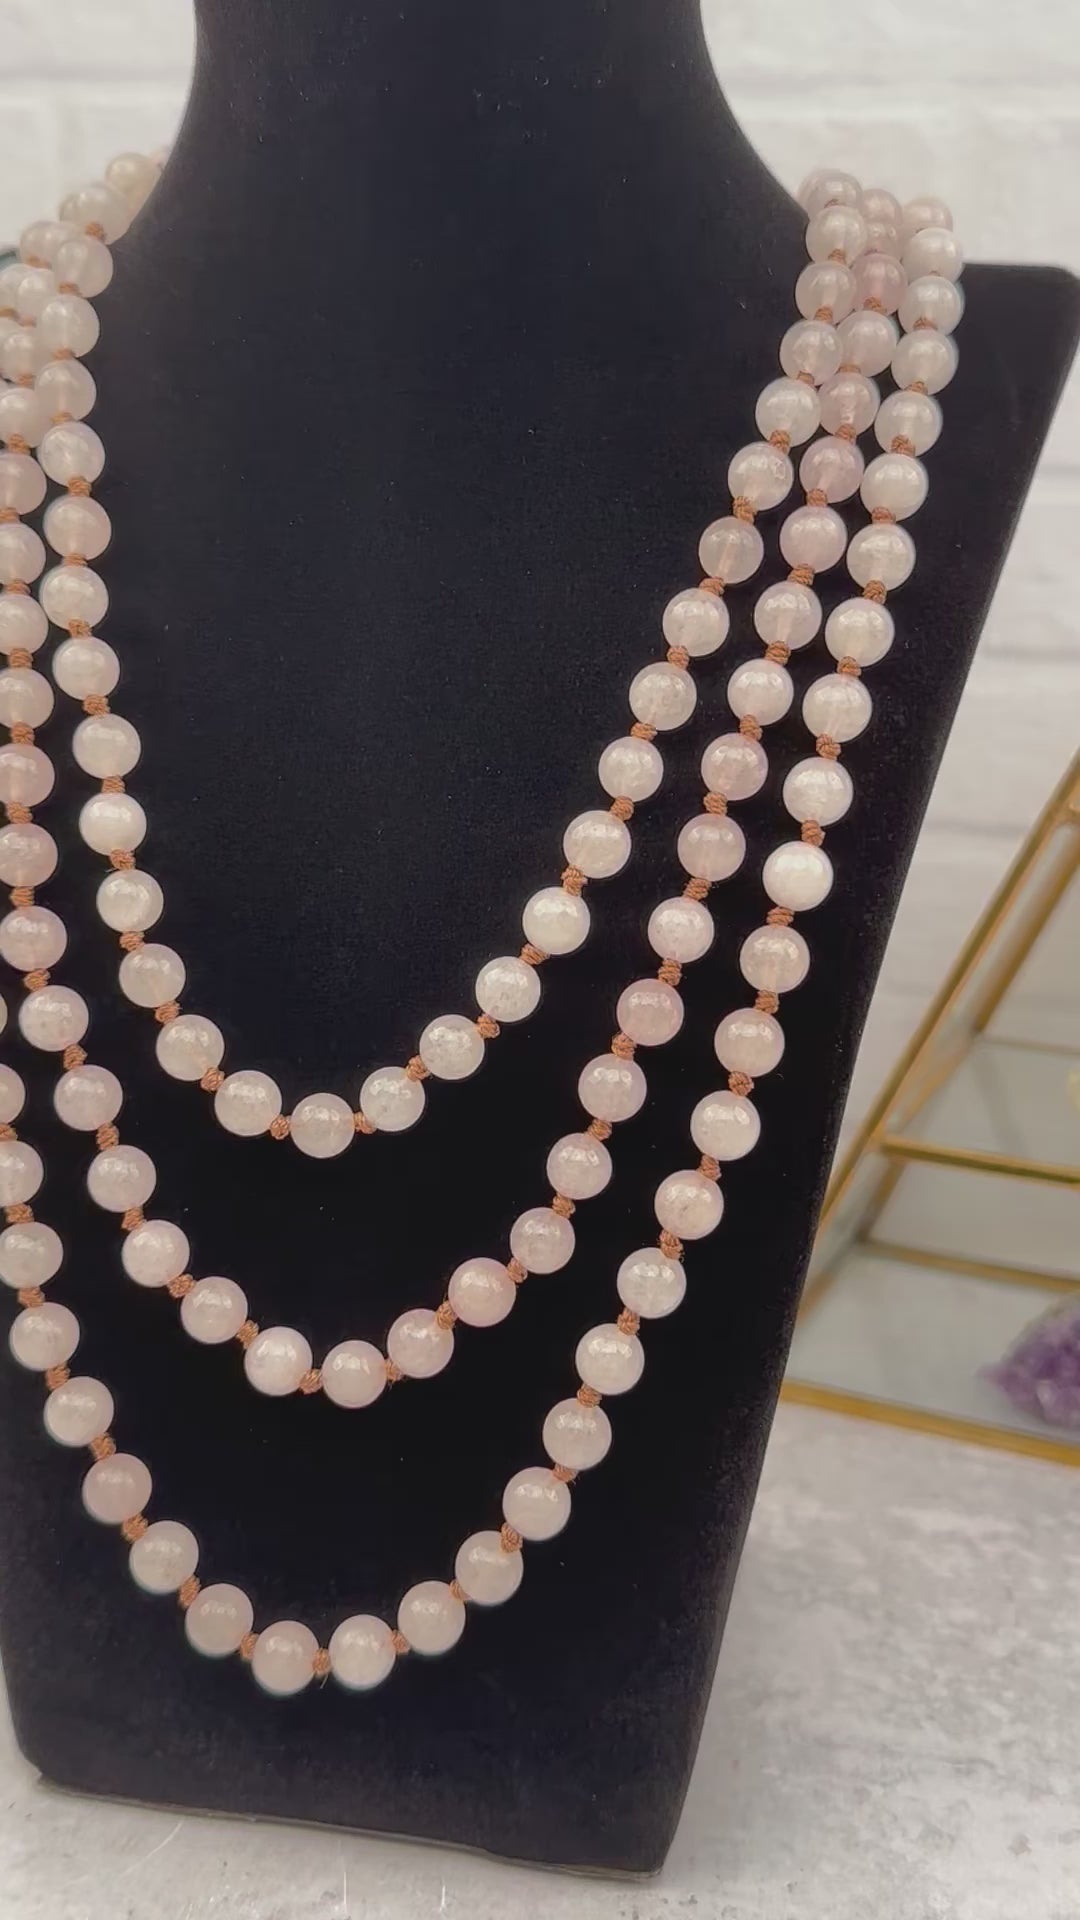 Rose Quartz Crystal Gemstone Knotted Necklace - Mala Necklace Spiritual Jewelry - 28"